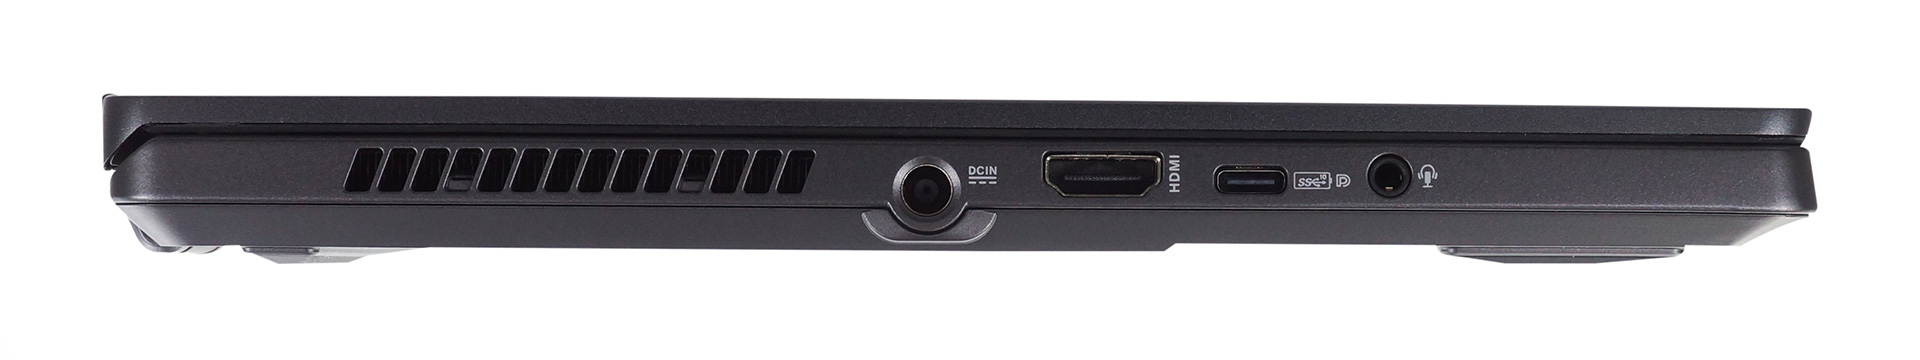 HDMI Splitter 1 in 4 Out -4K Hdmi Splitter 1x4 Ports v1.4 Powered 4K/2K  Full Ultra HD 1080p US Adapter 3D Support